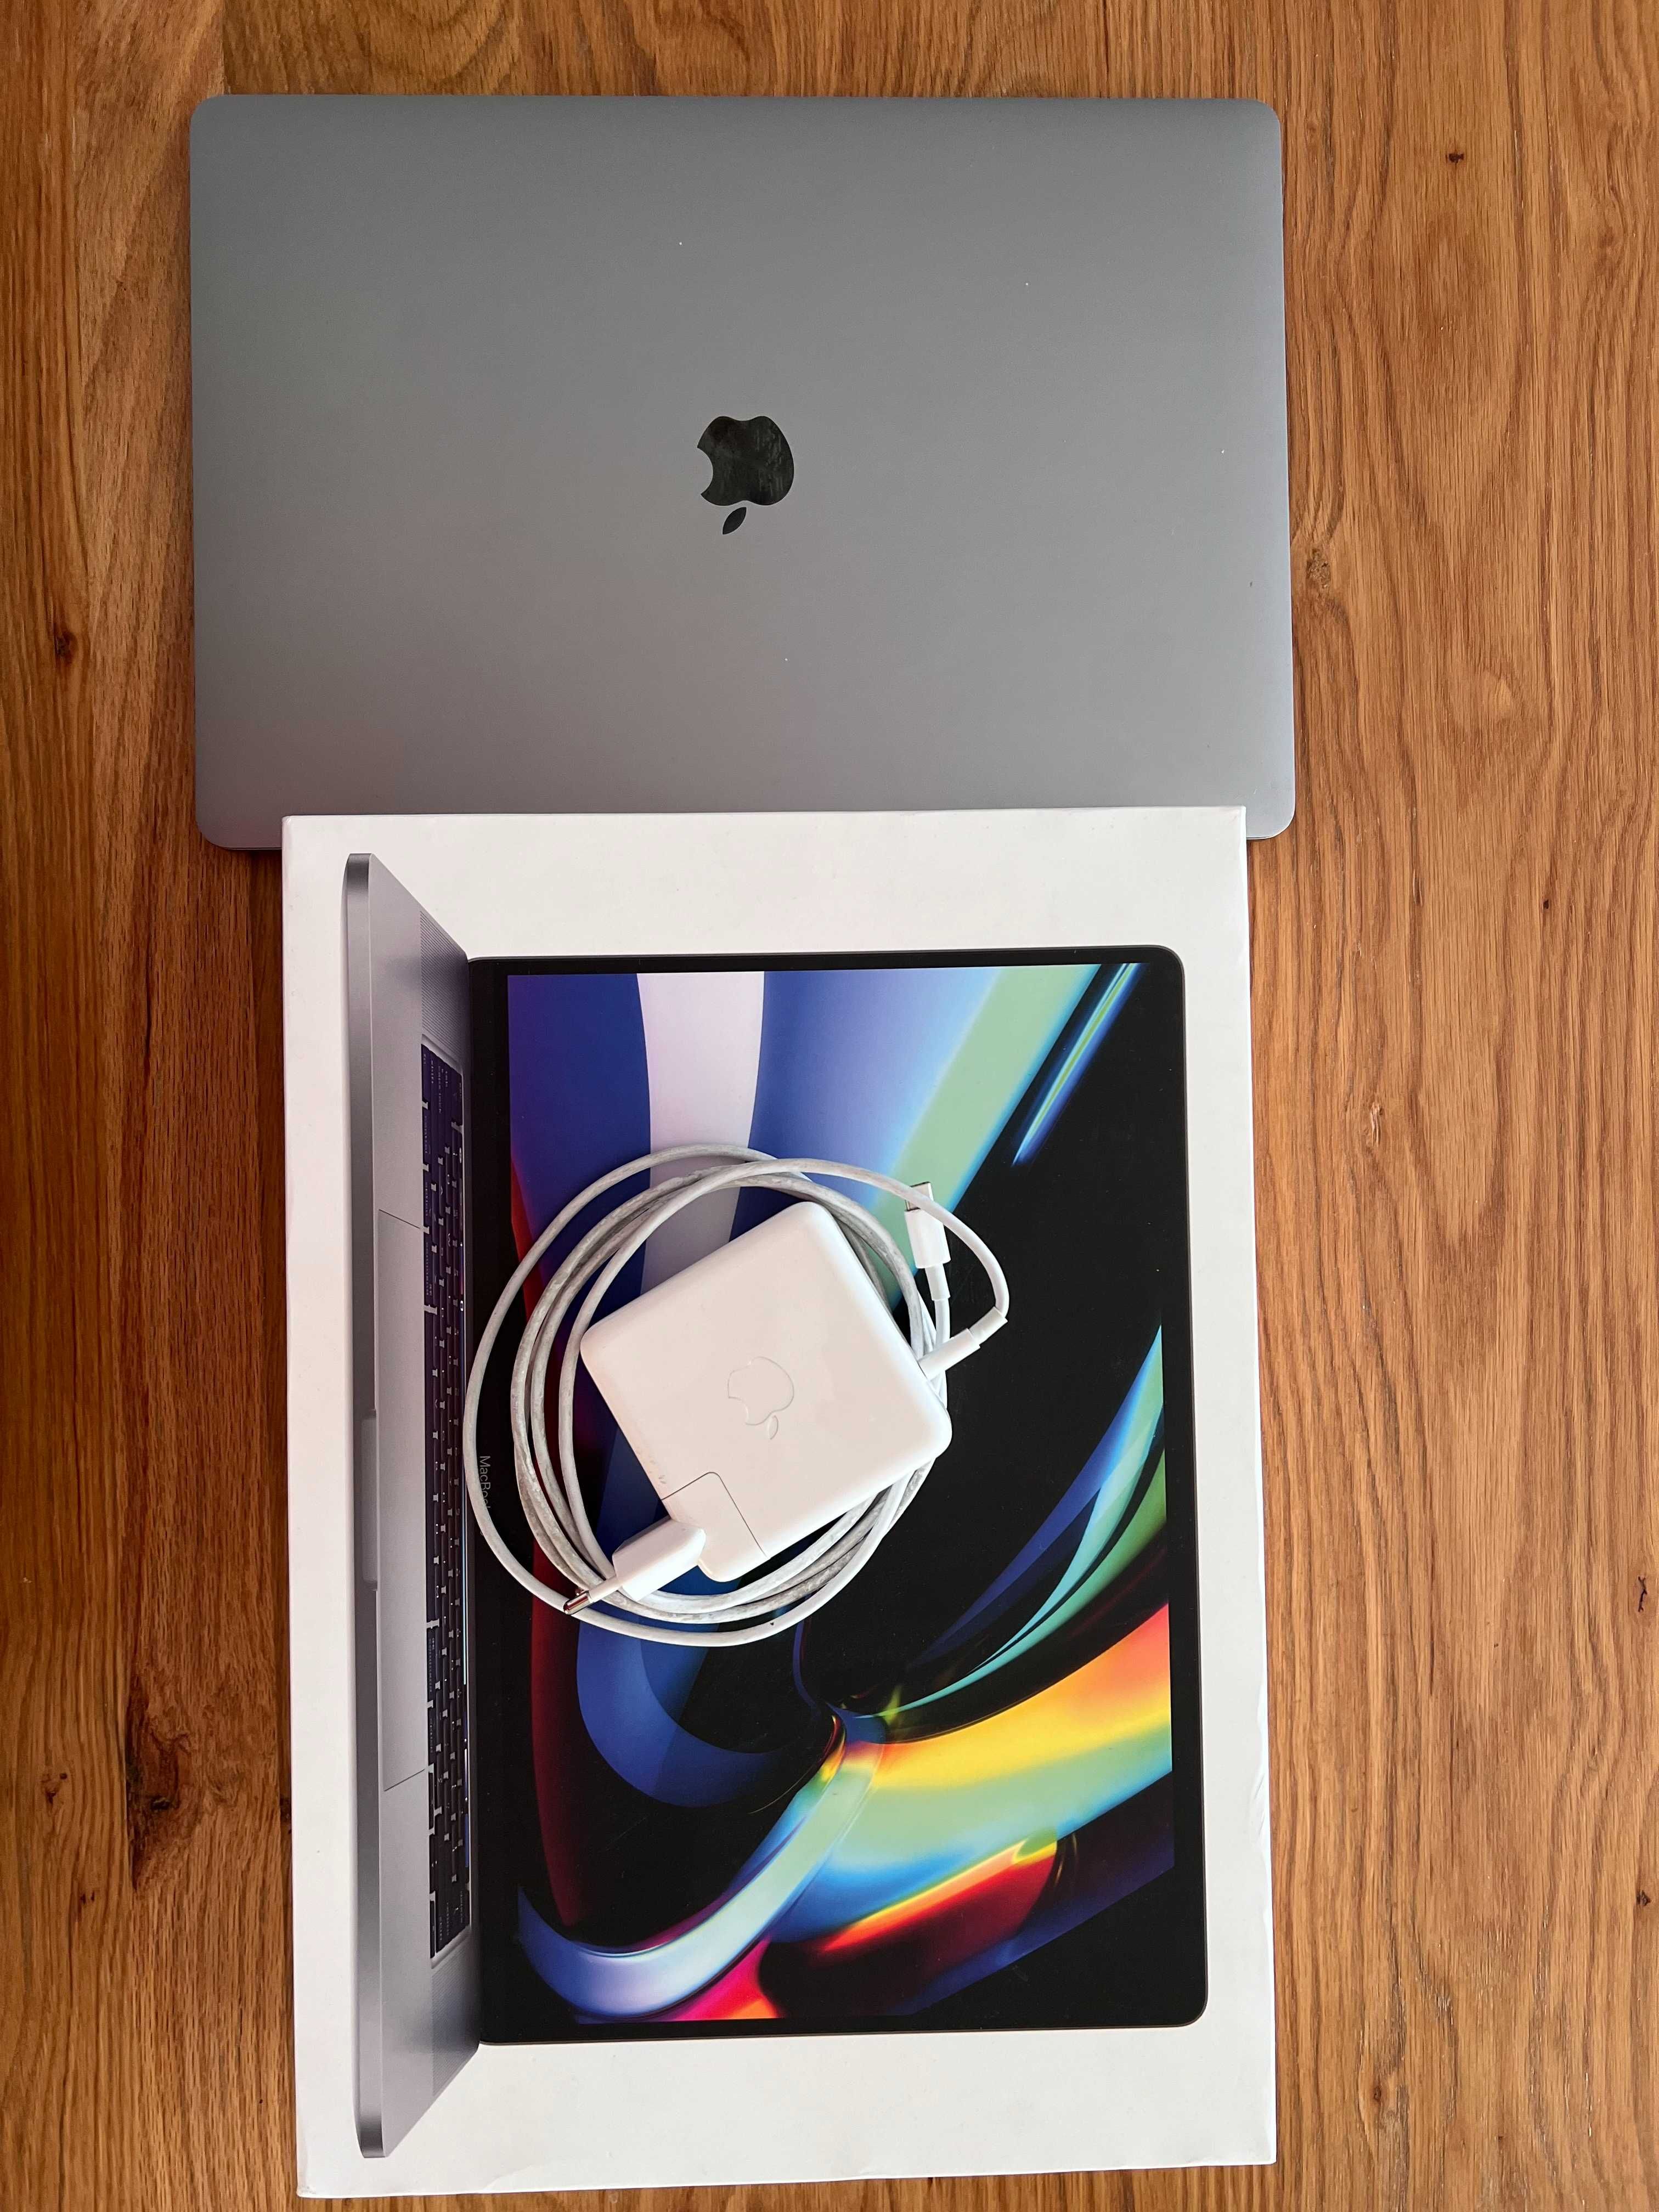 MacBook Pro 16 (2019) Intel i7 16GB/RAM 500GB Touch Bar